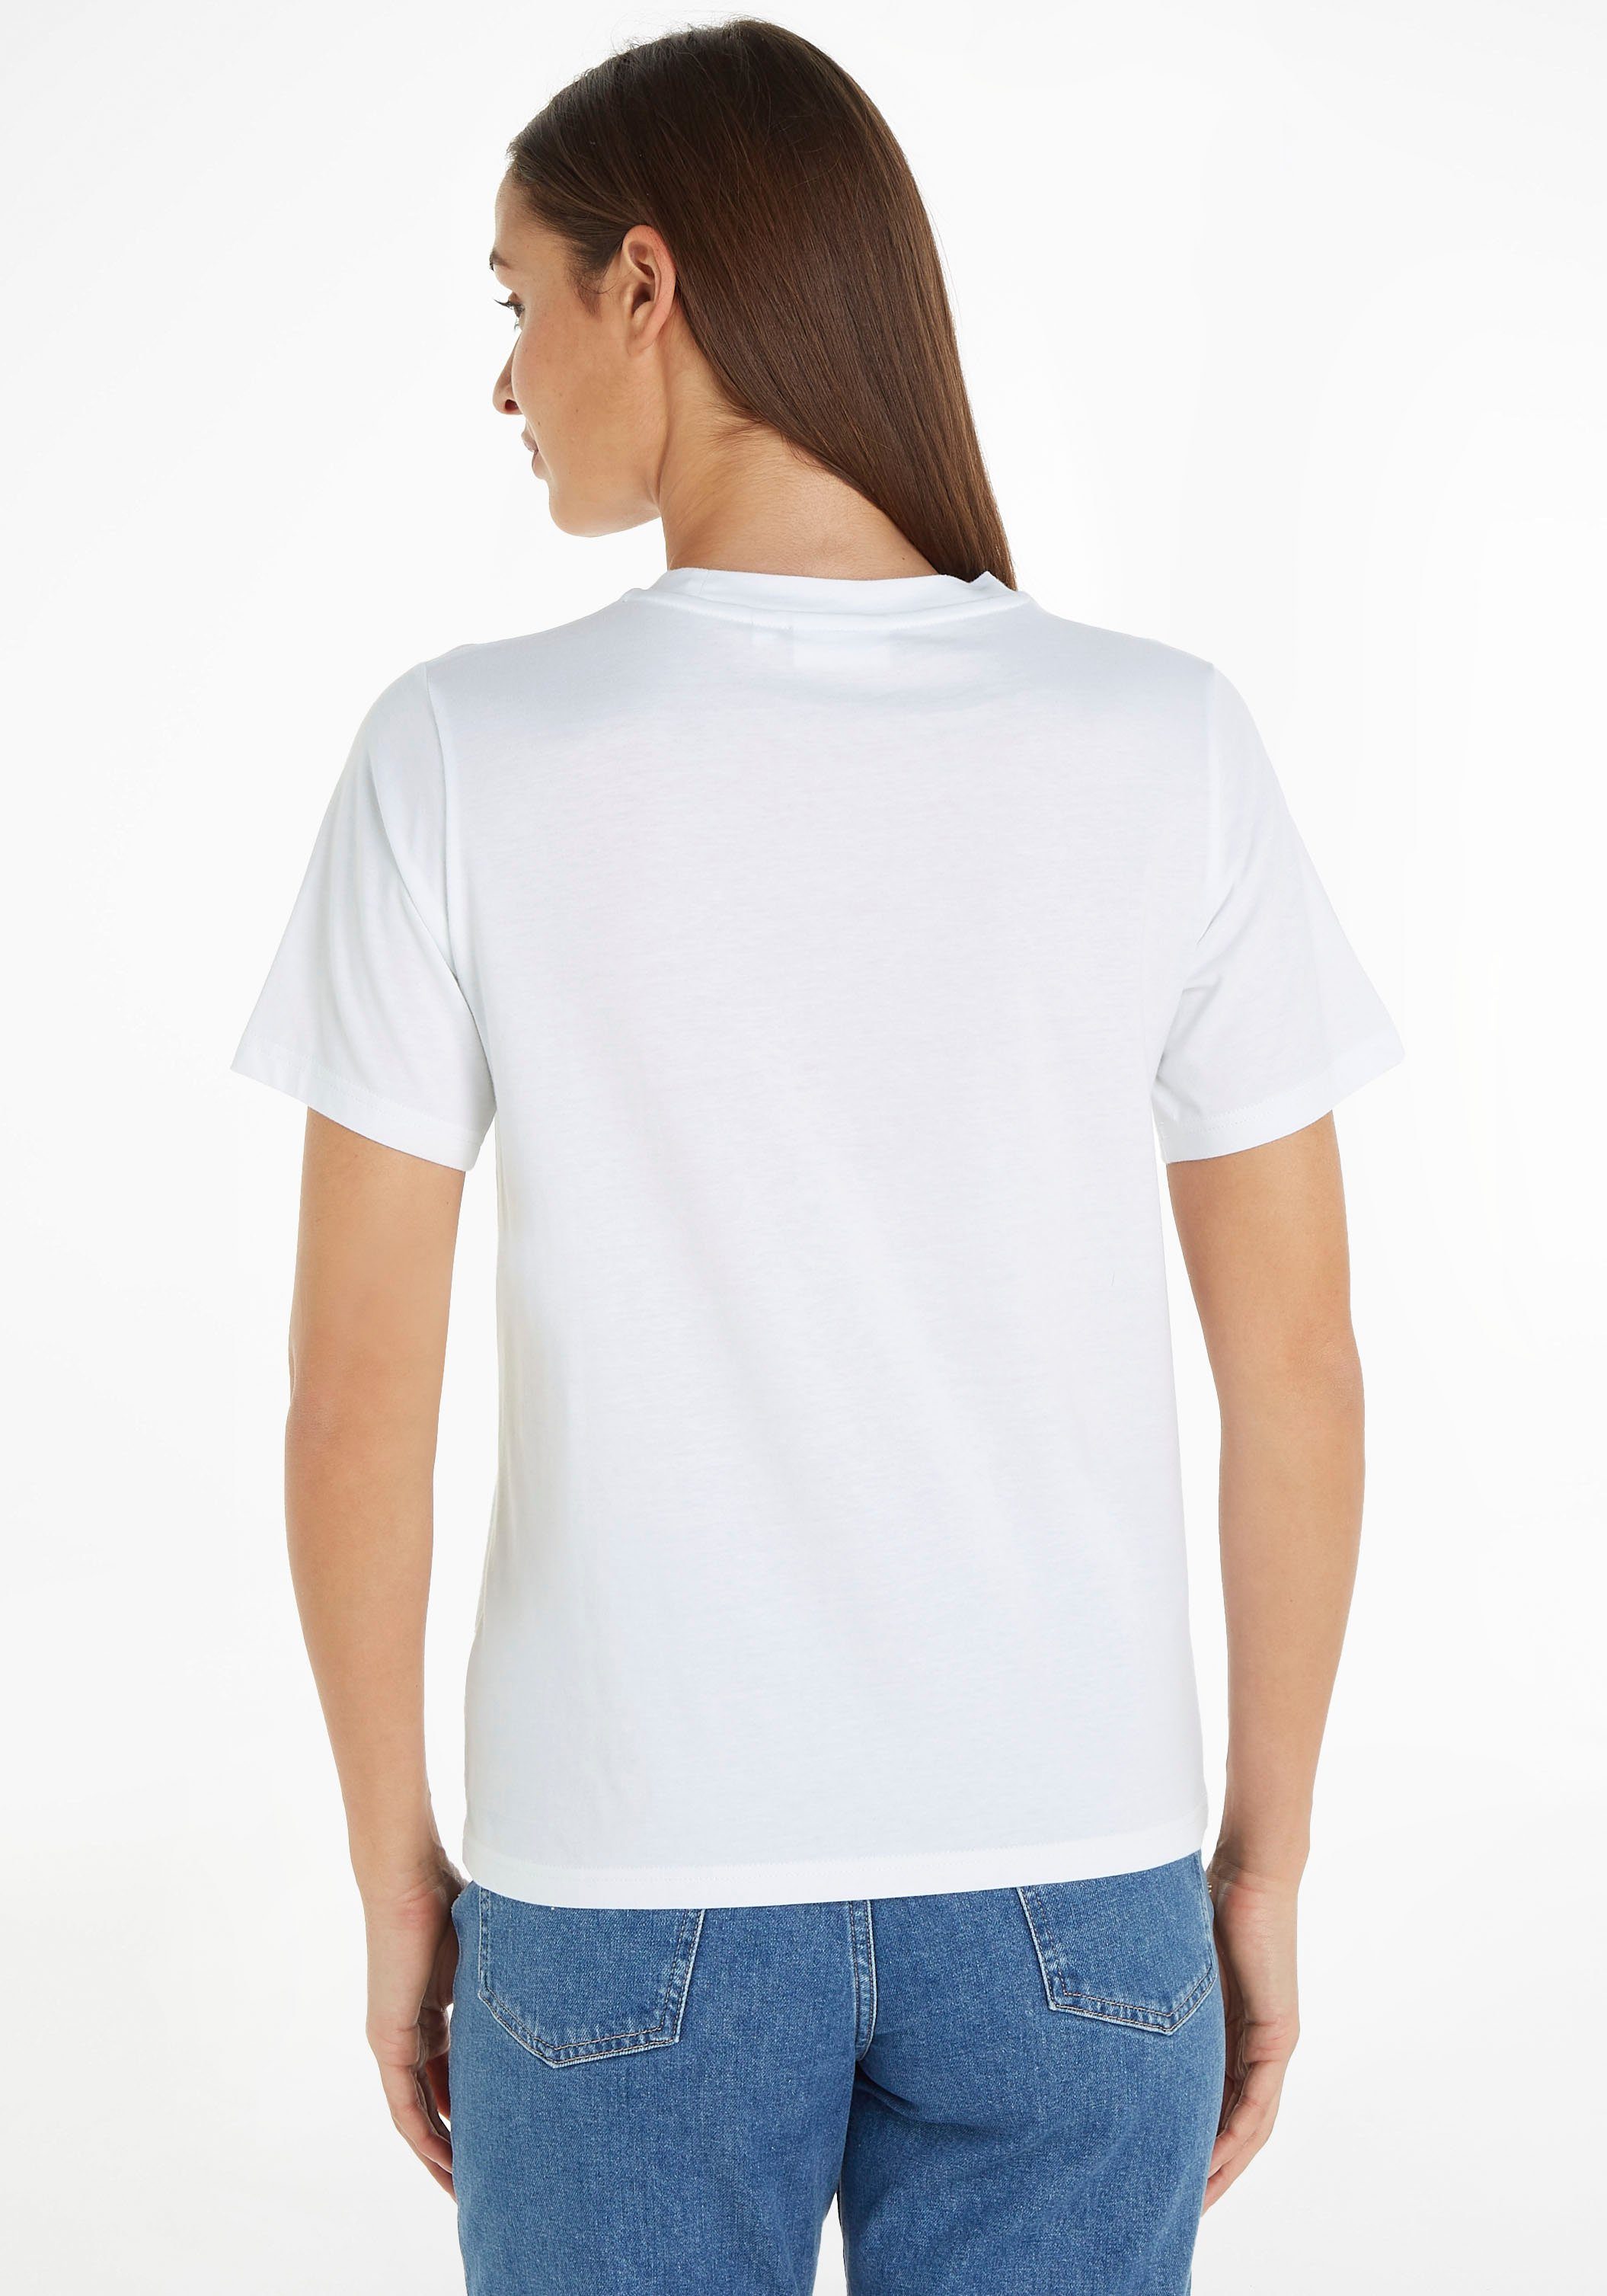 Calvin Klein T-Shirt mit Floral-Printmuster